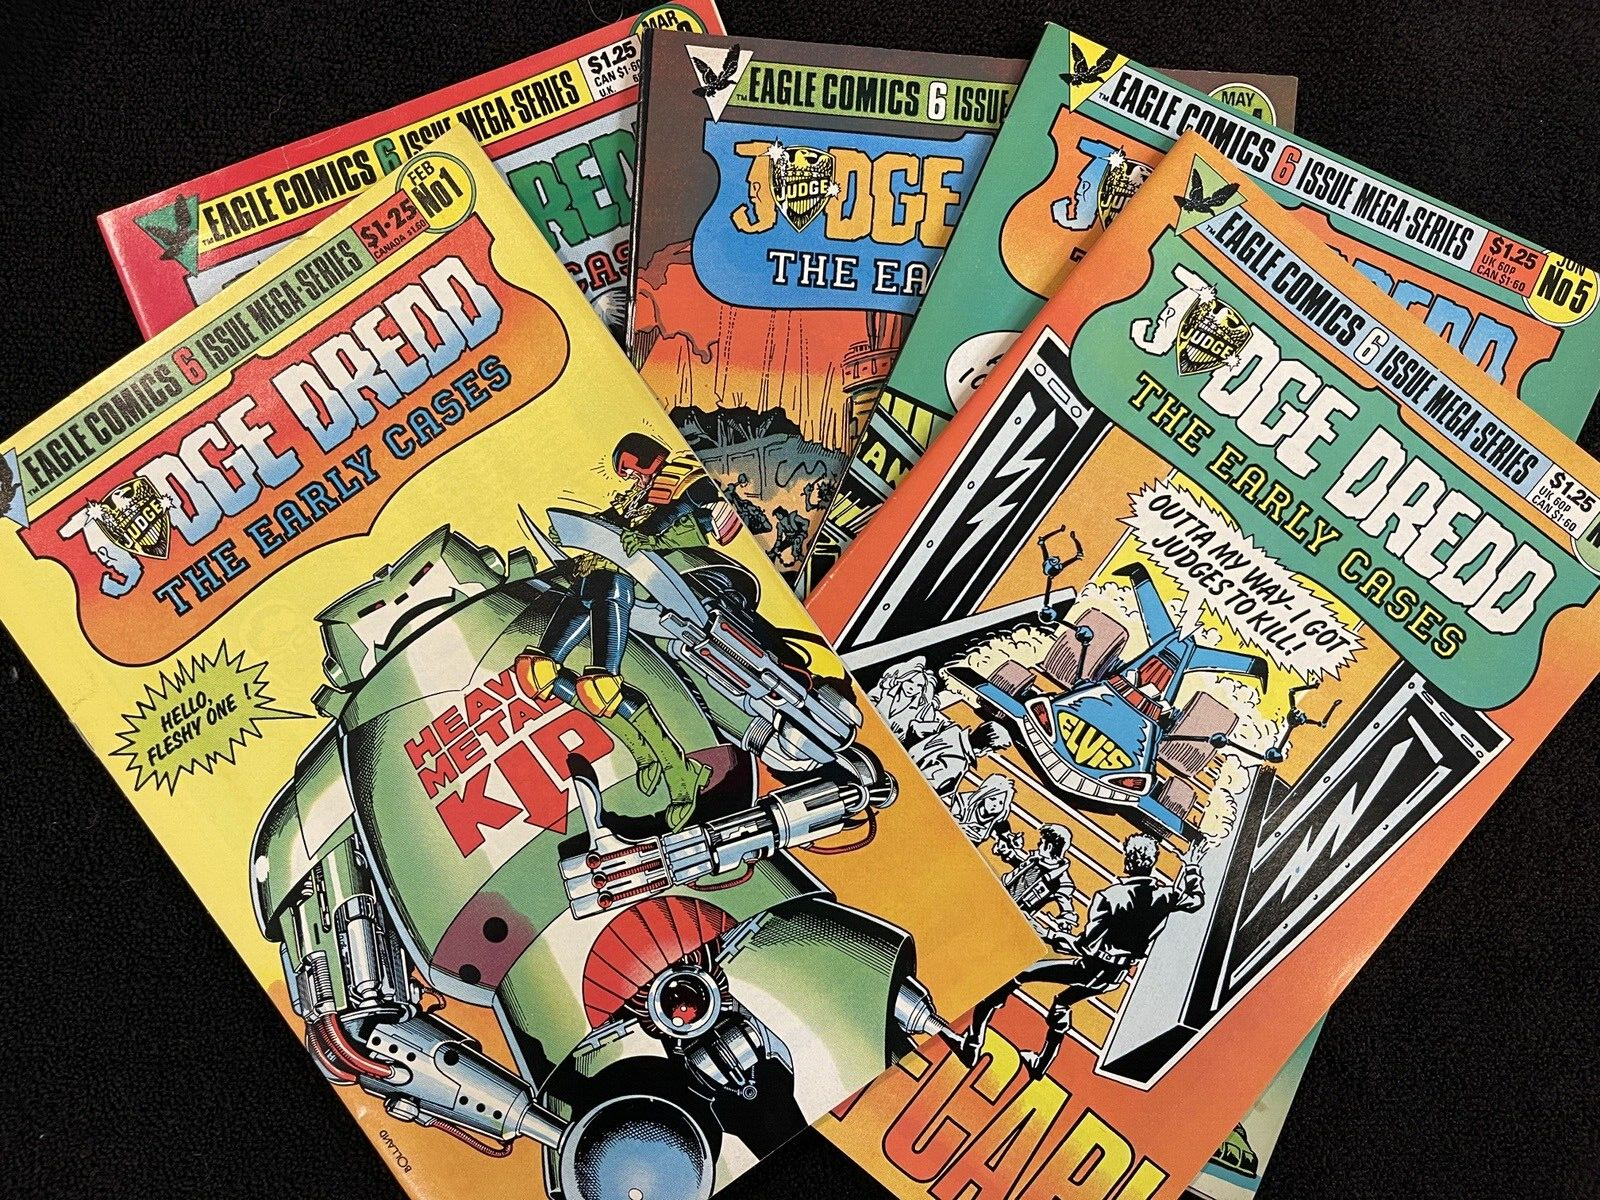 Judge Dredd: The Early Cases #1, 2, 4, 5, 6 (Eagle Comics, 1986) Lot of 5 Books! Без бренда